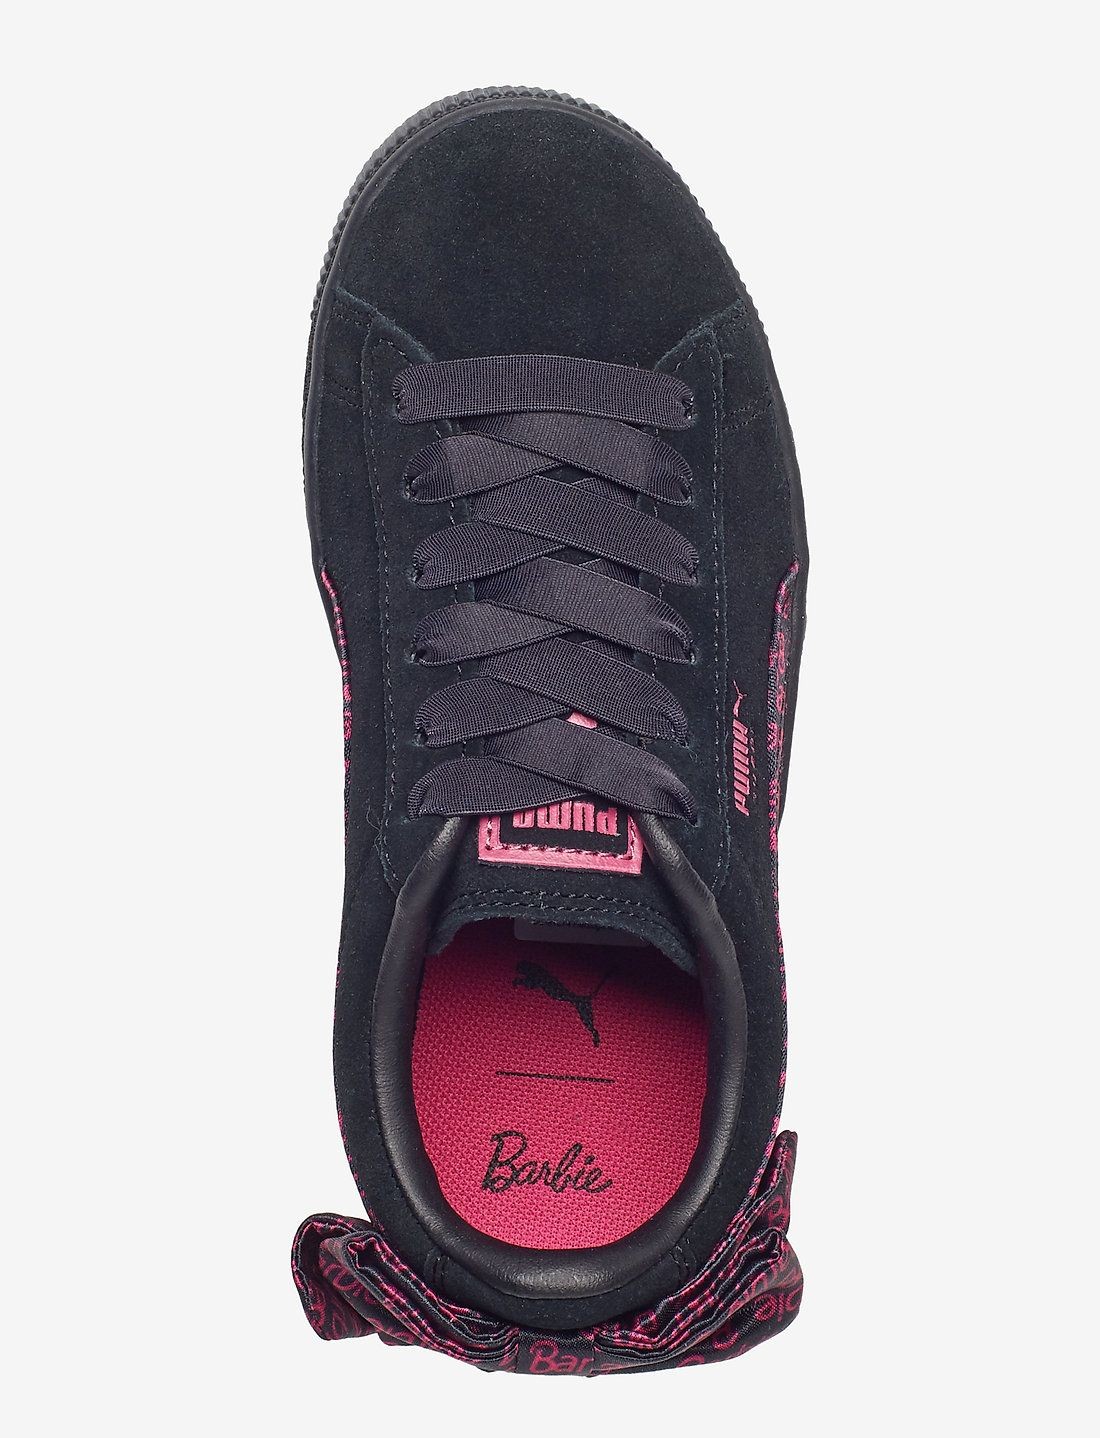 Puma Barbie x Seude Classic (19 EUR) Girl Sneakers